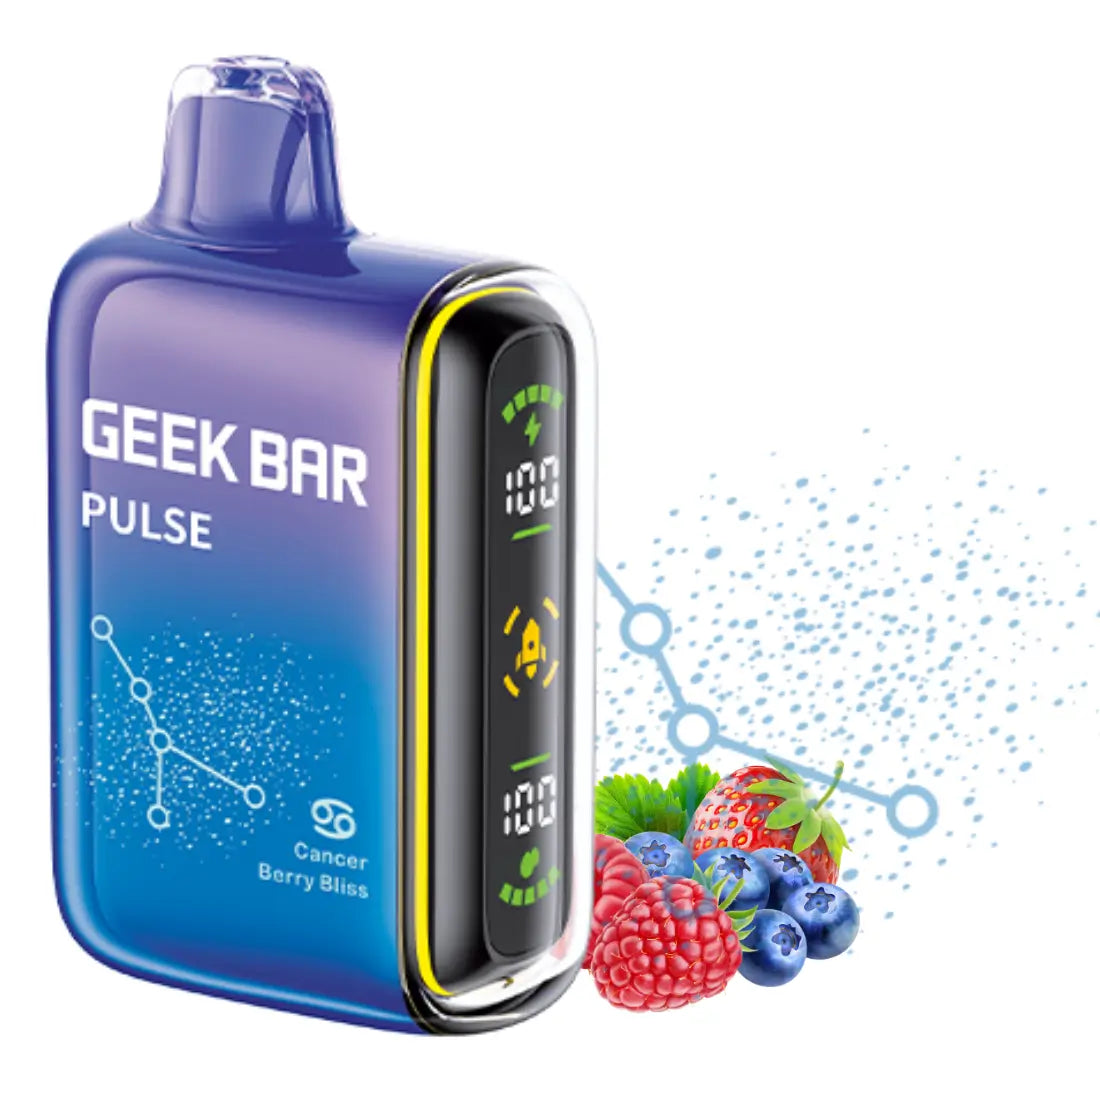 Geek Bar Pulse Colorado Berry Bliss